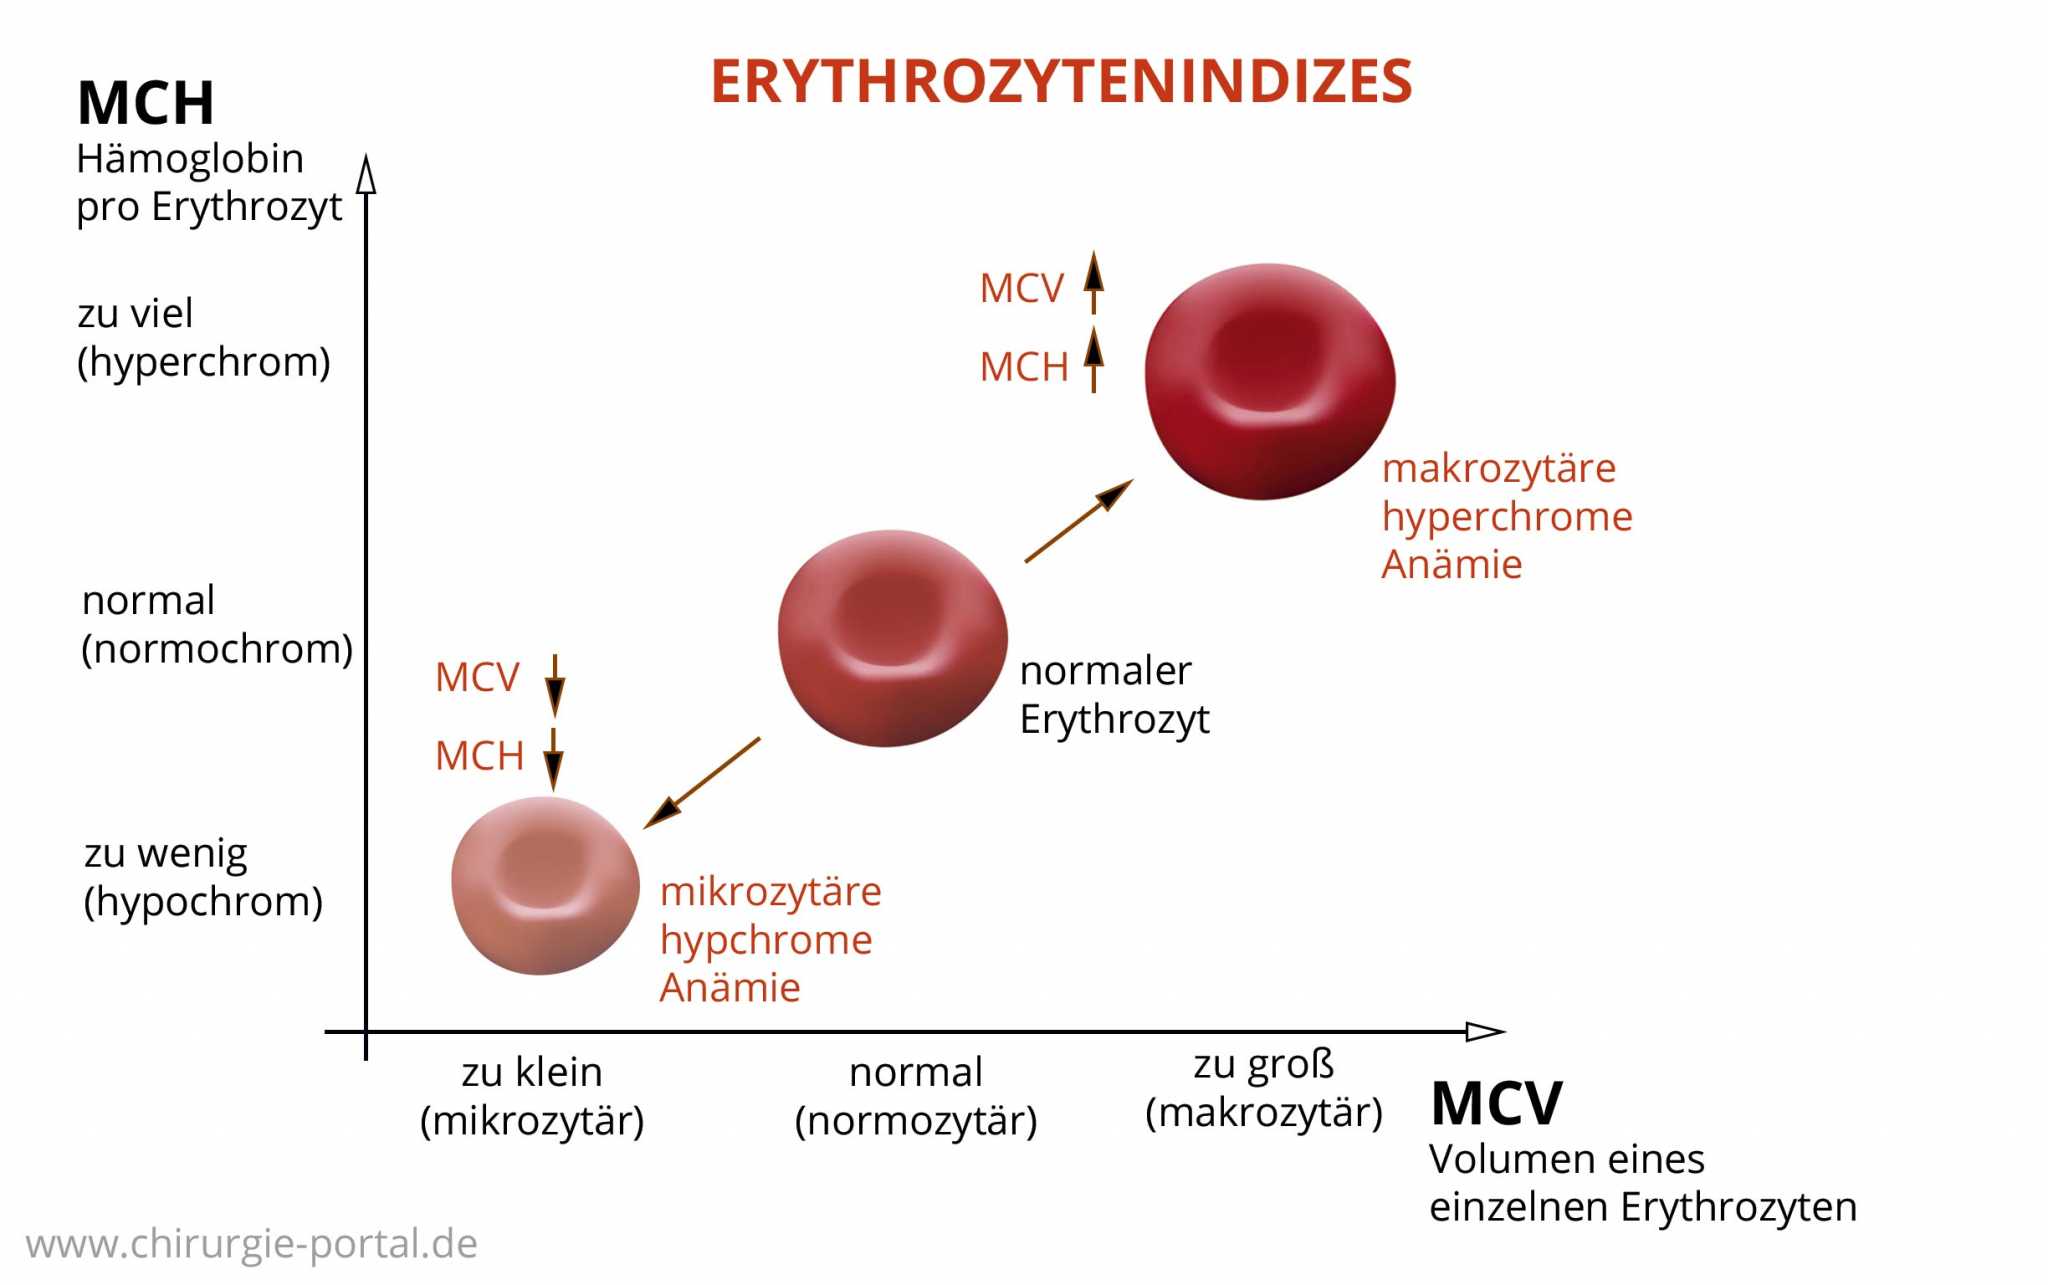 Mch анемия. MCV эритроциты. Содержание гемоглобина в эритроците. MCH В анализе крови. Ср содержание гемоглобина в эритроците.